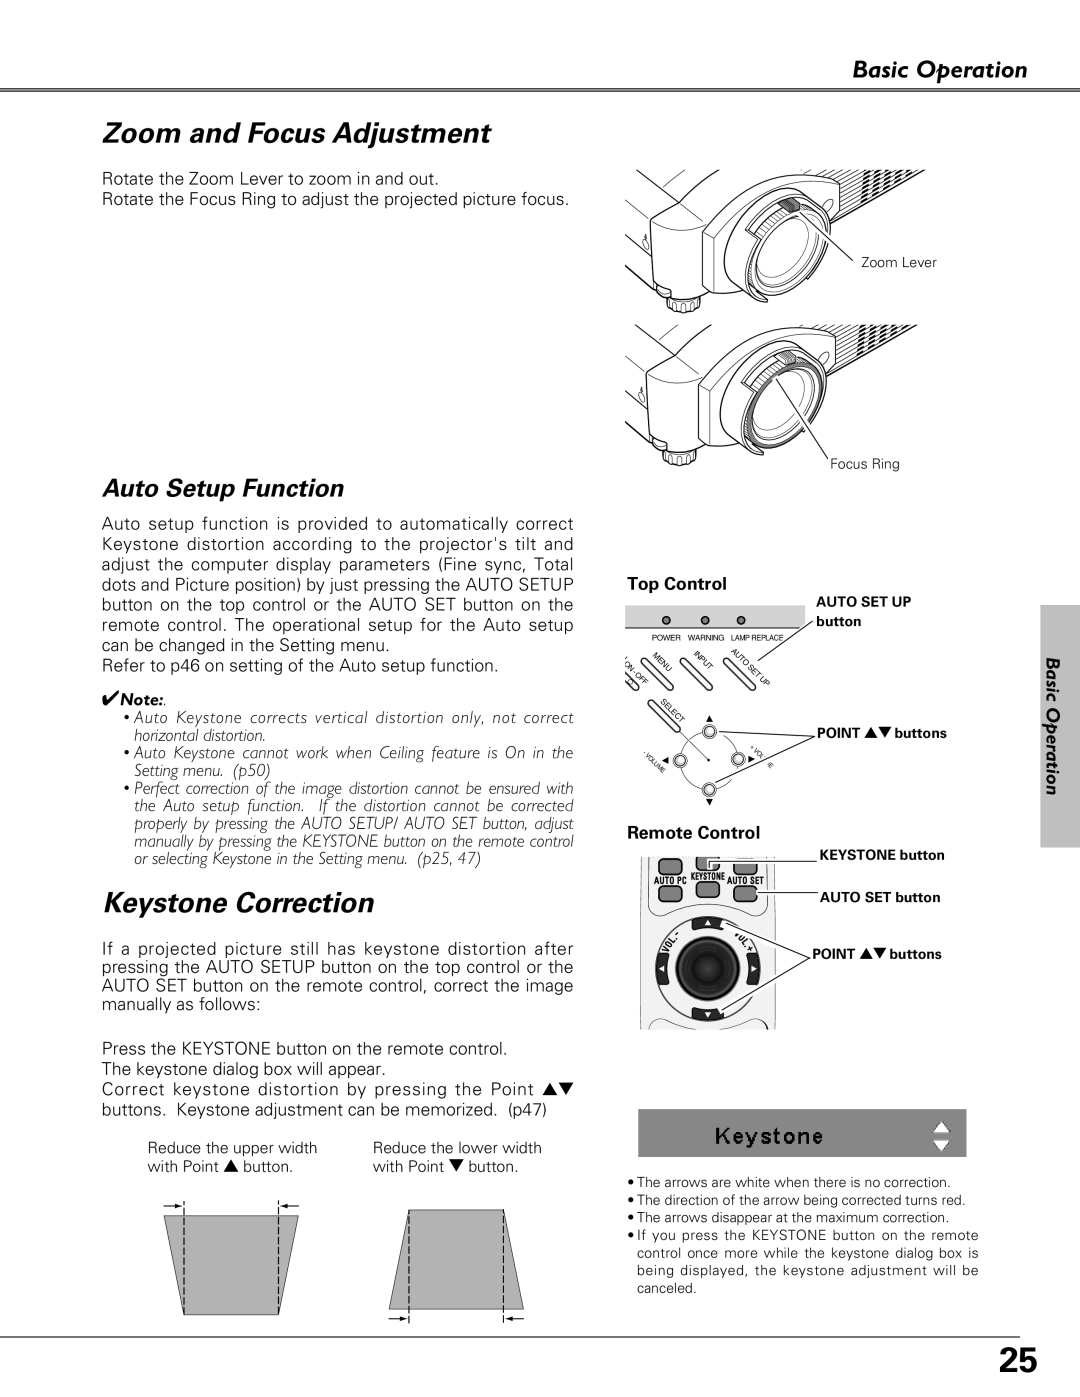 Eiki LC-XB27 owner manual Zoom and Focus Adjustment, Keystone Correction, Auto Setup Function, Basic Operation, Top Control 